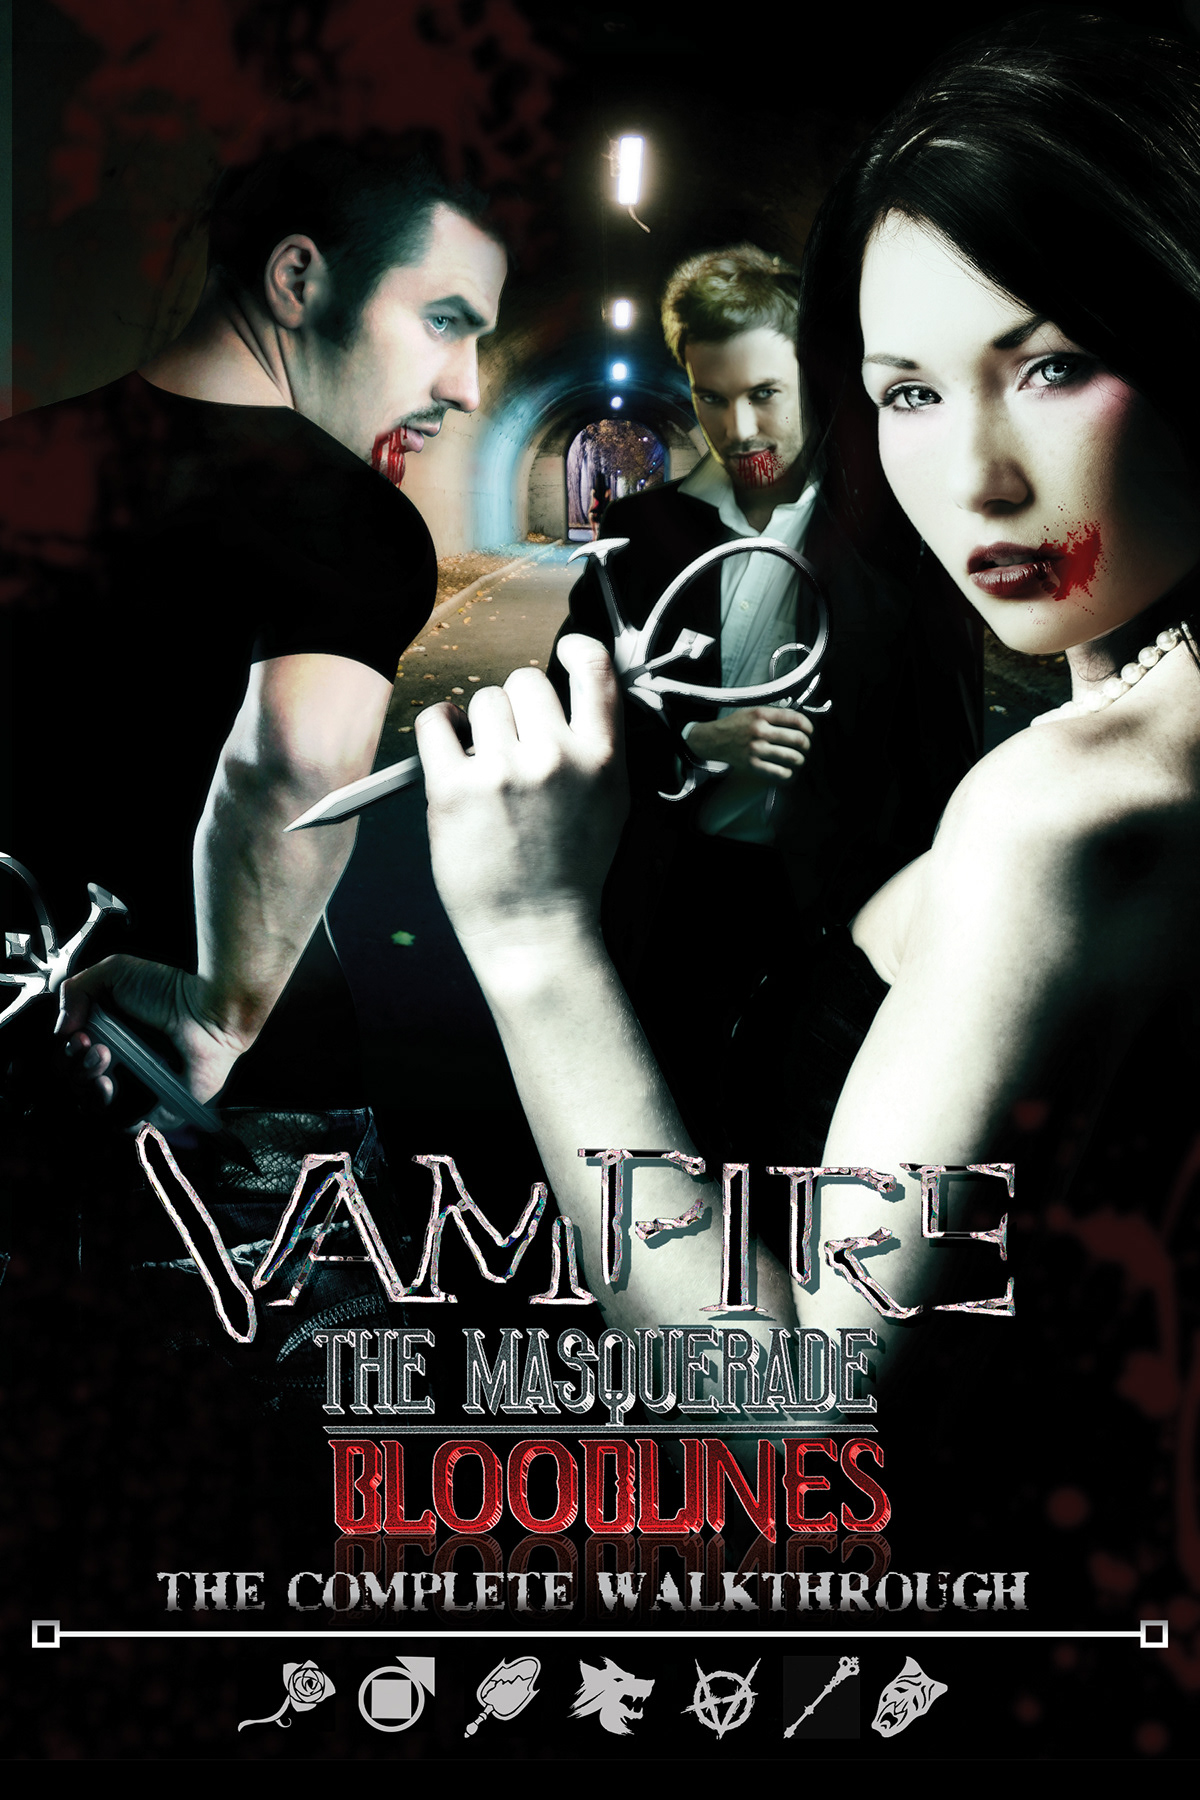 Vampire the Masquerade Bloodlines vampire gore horror Supernatural Games PC rpg ANKH murder